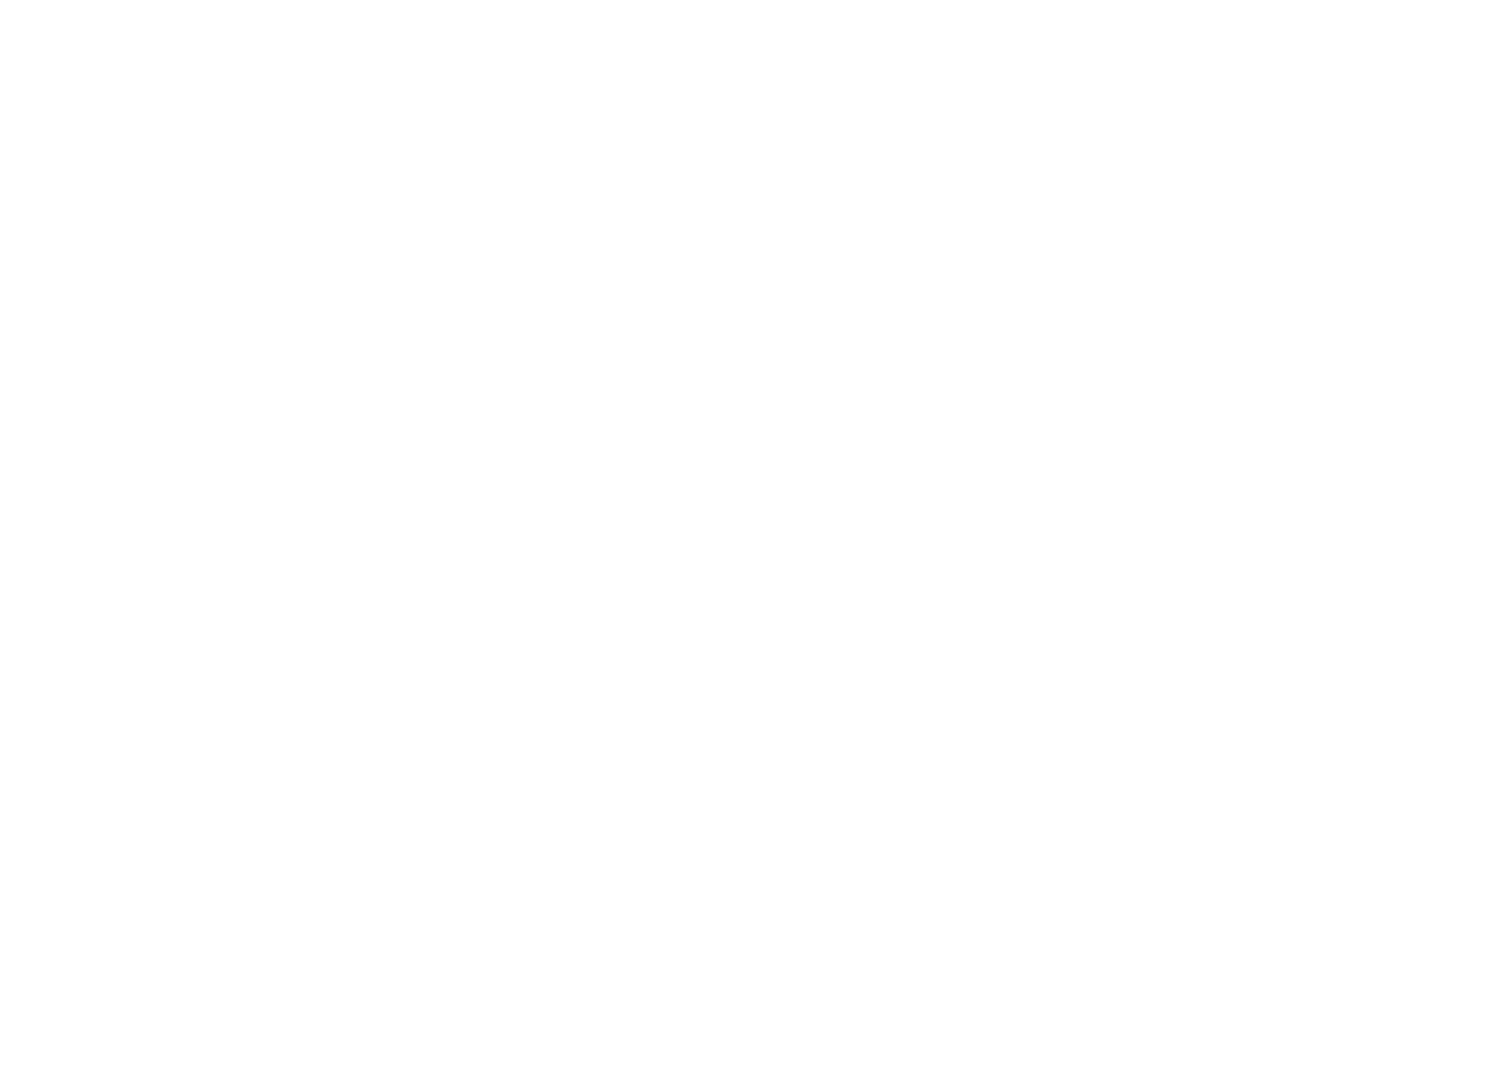 www.cherylgalbraith.art